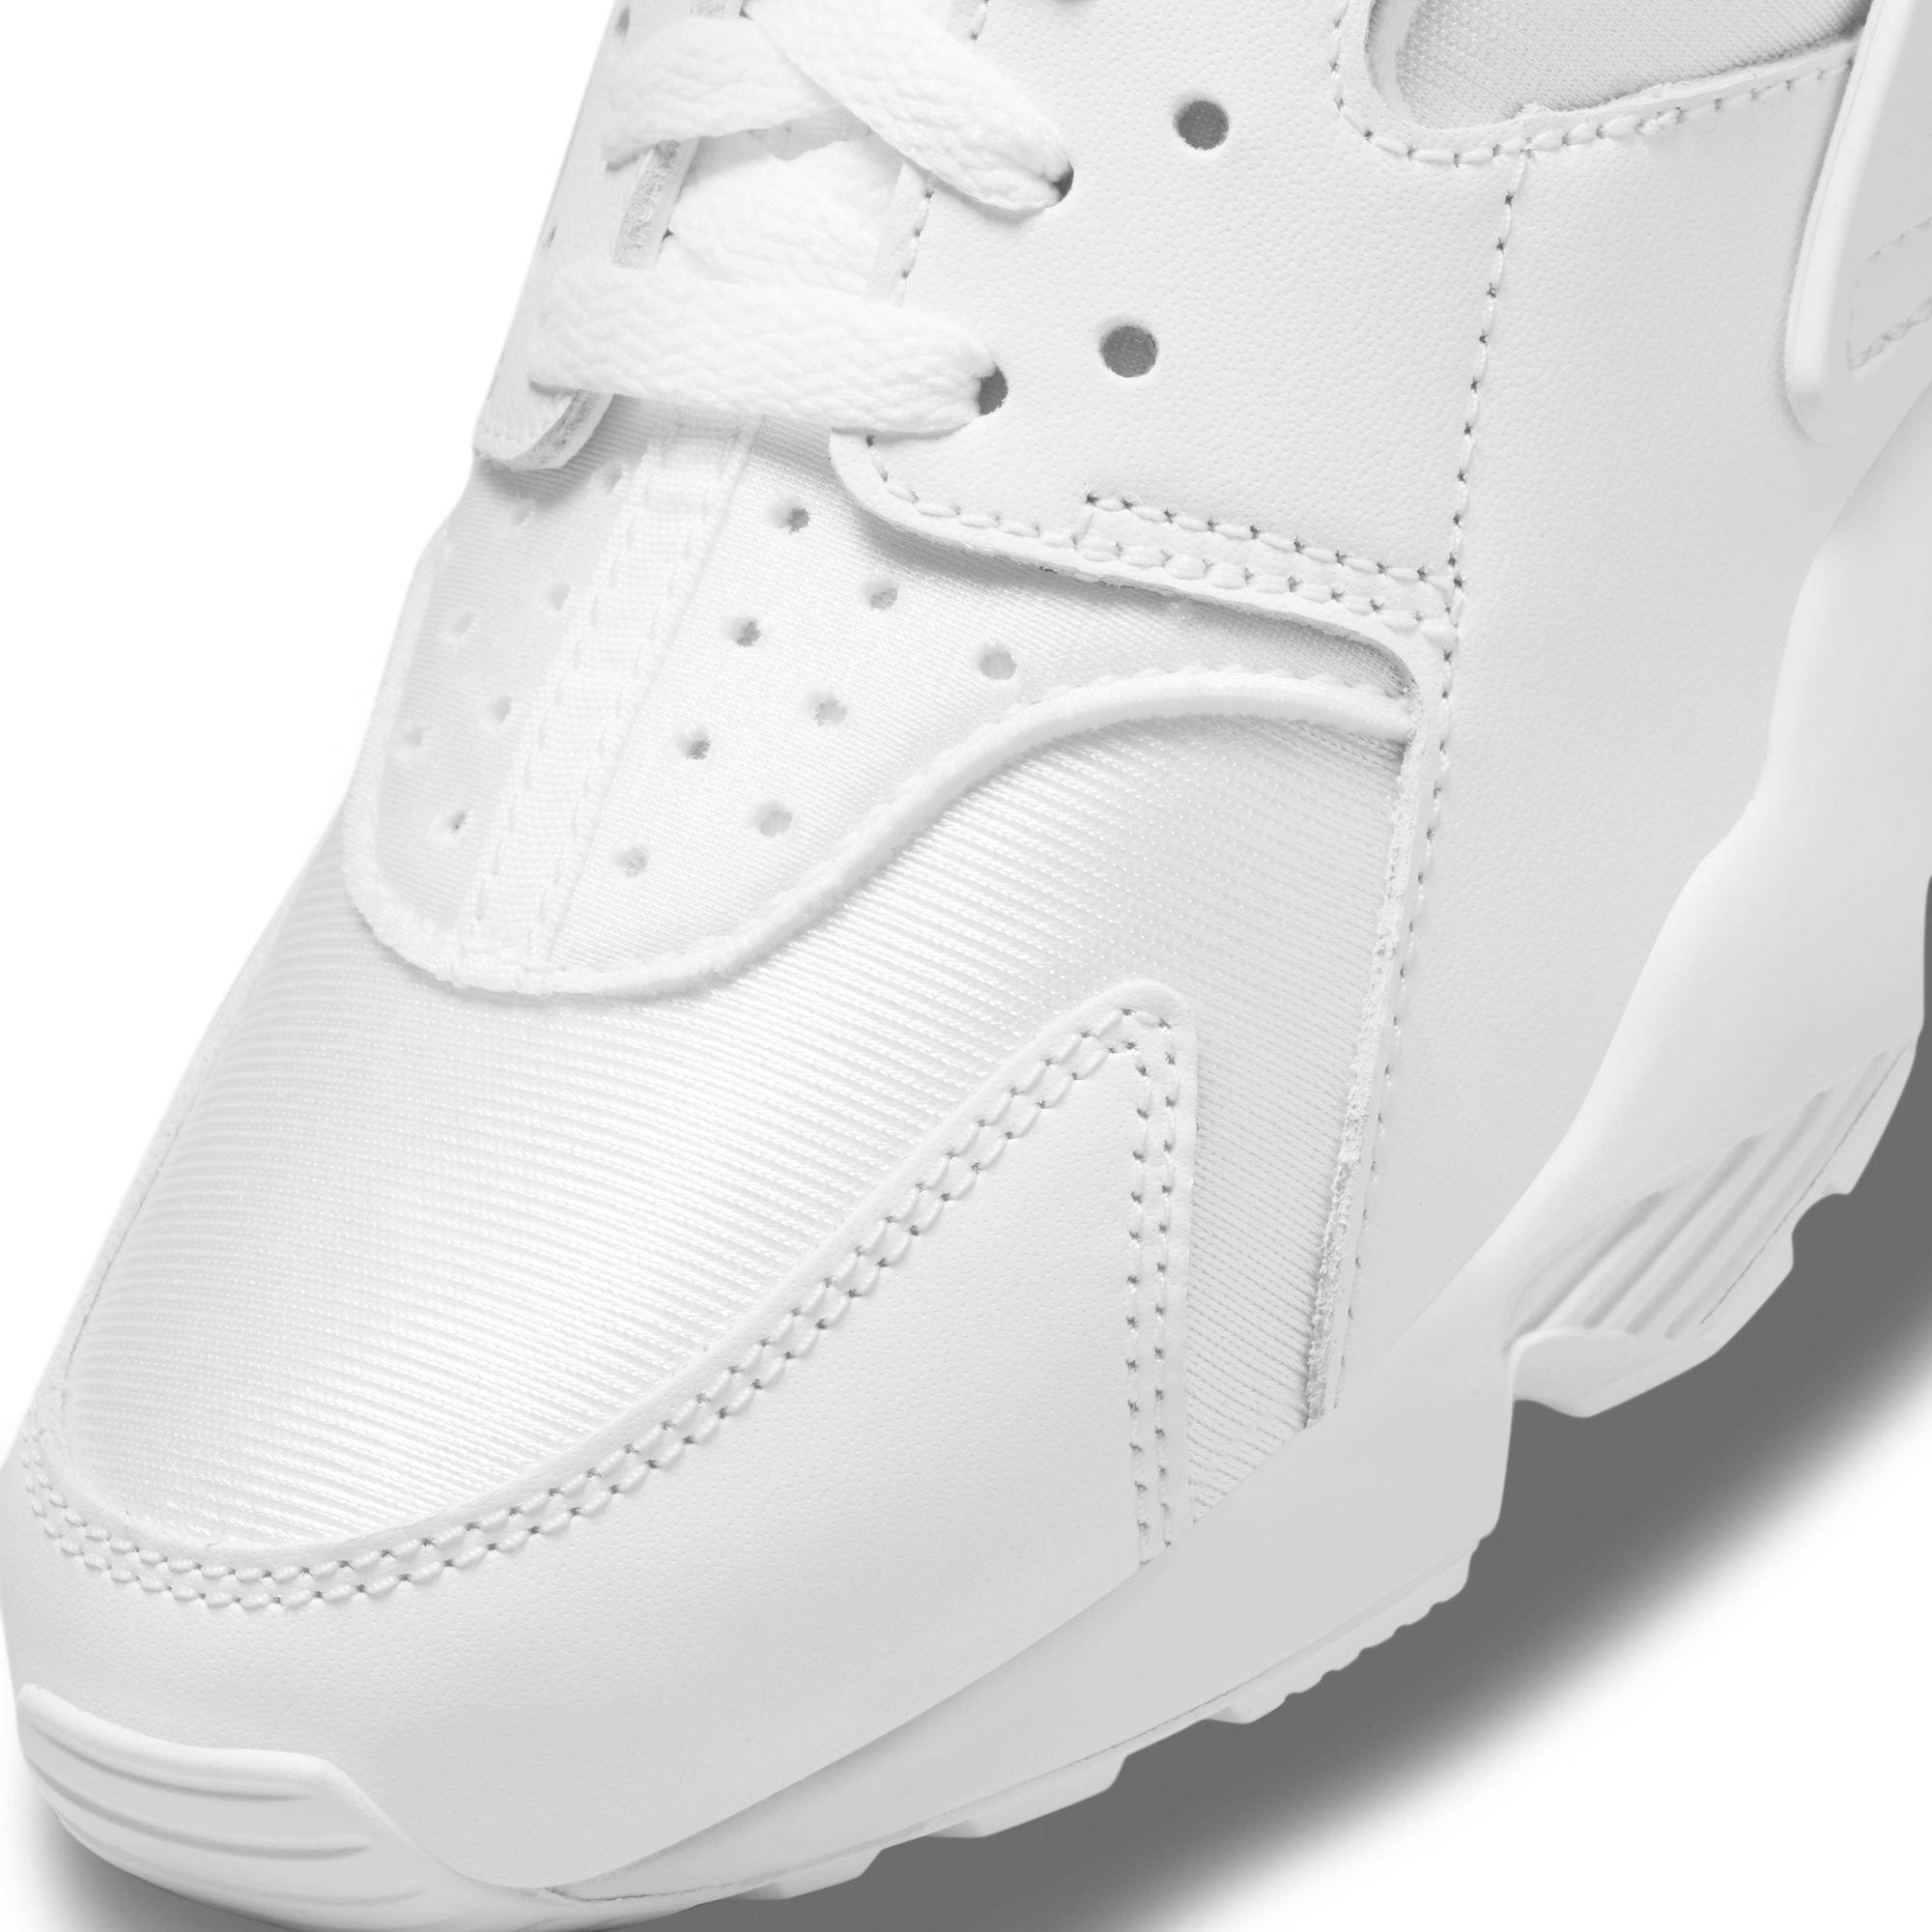 Nike Air "White/Pure Platinum" Women's Shoe